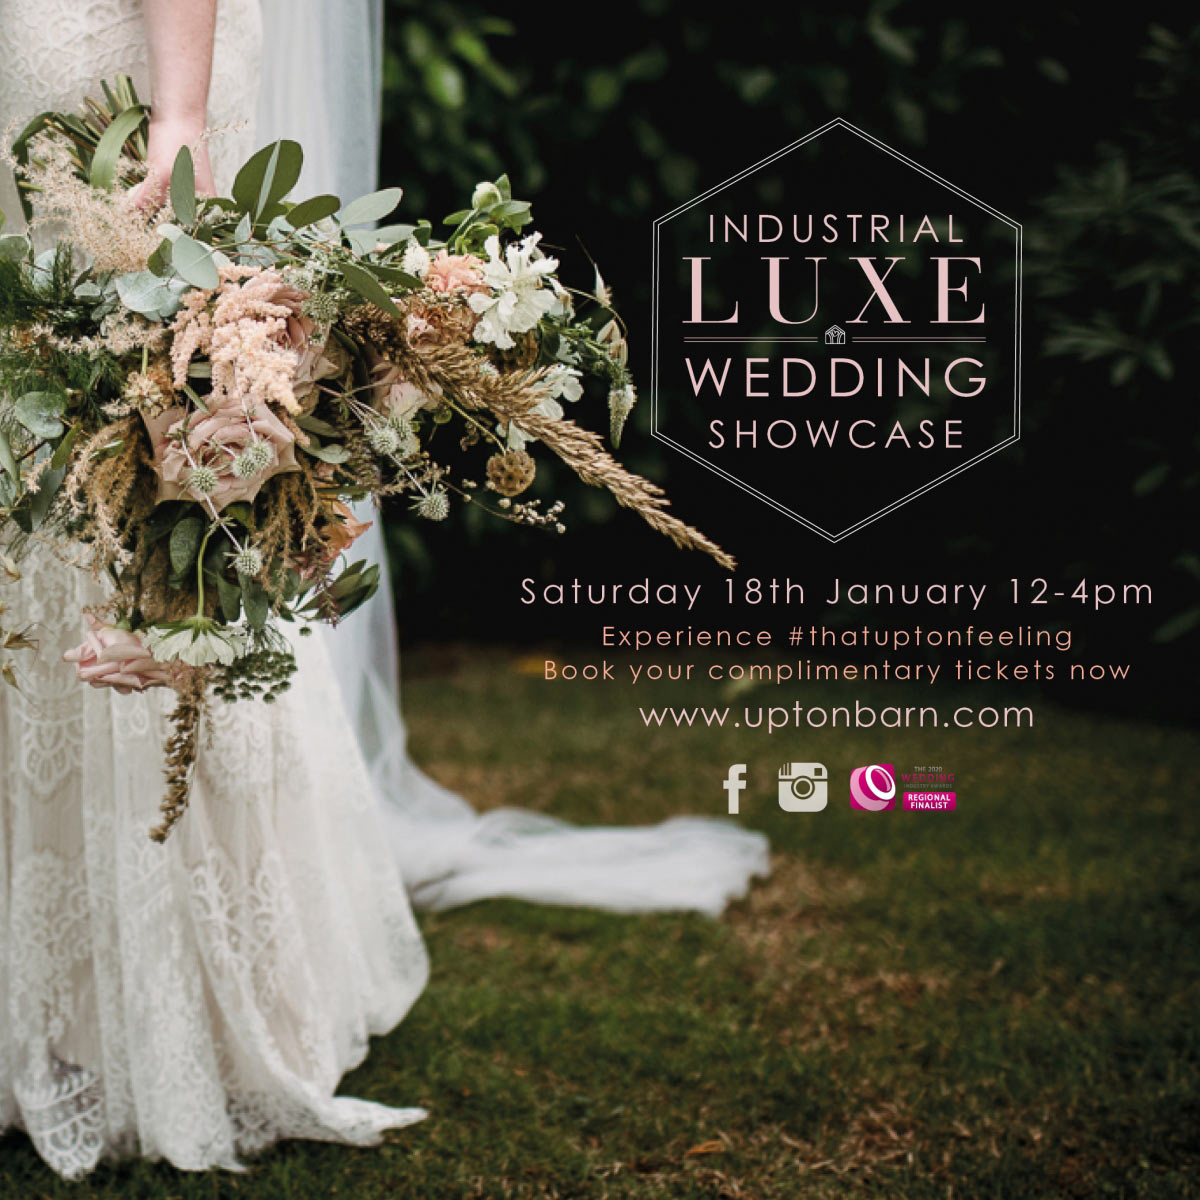 Industrial Luxe Wedding Showcase at Upton Barn & Walled Garden